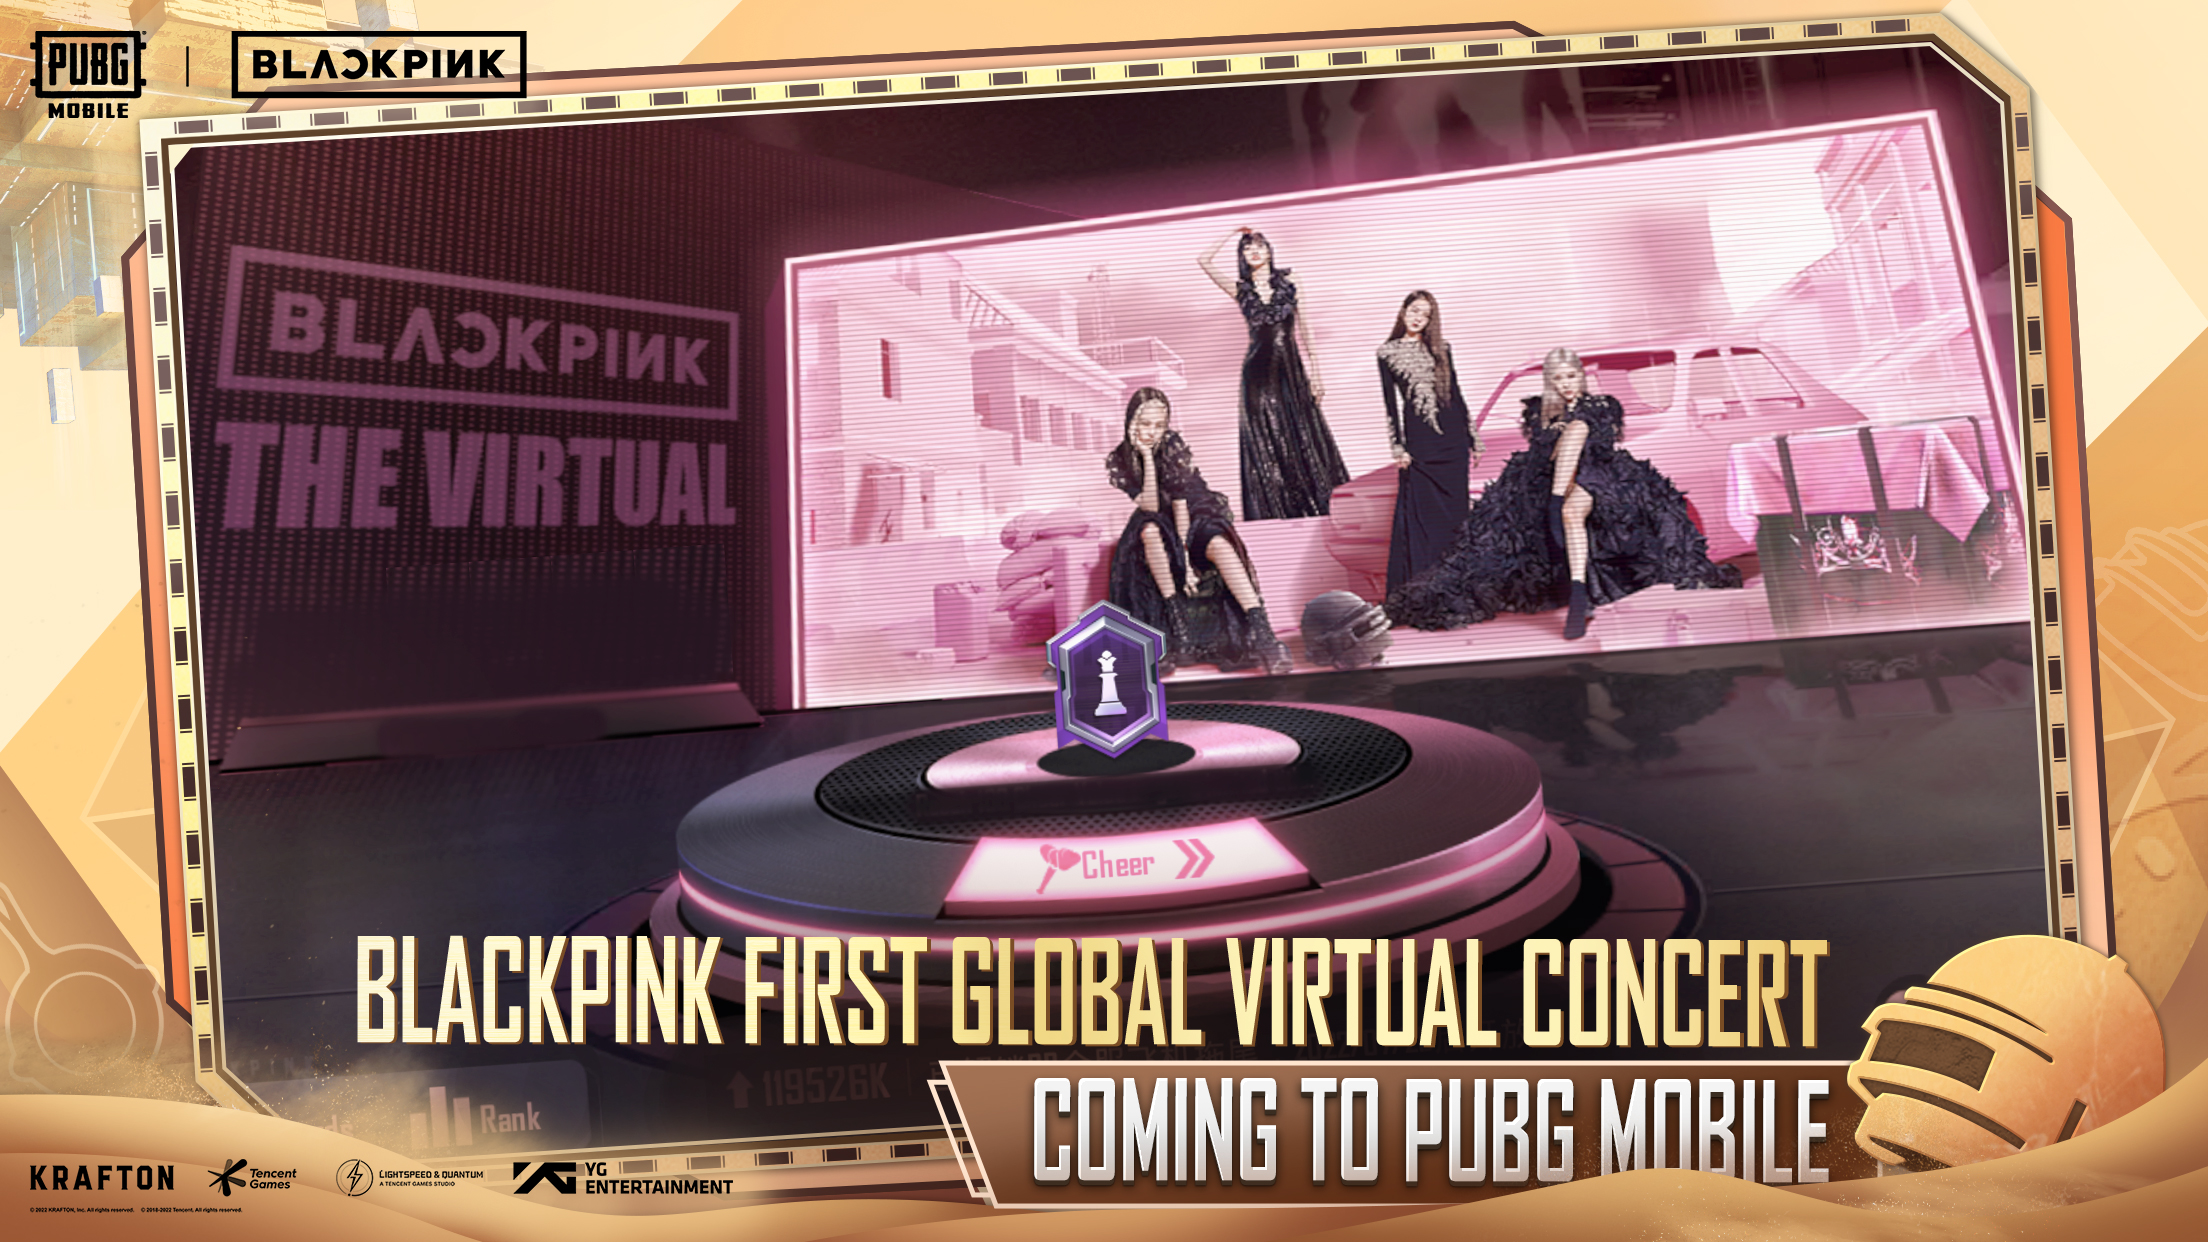 blackpink - the virtual - virtual concert - pubg mobile